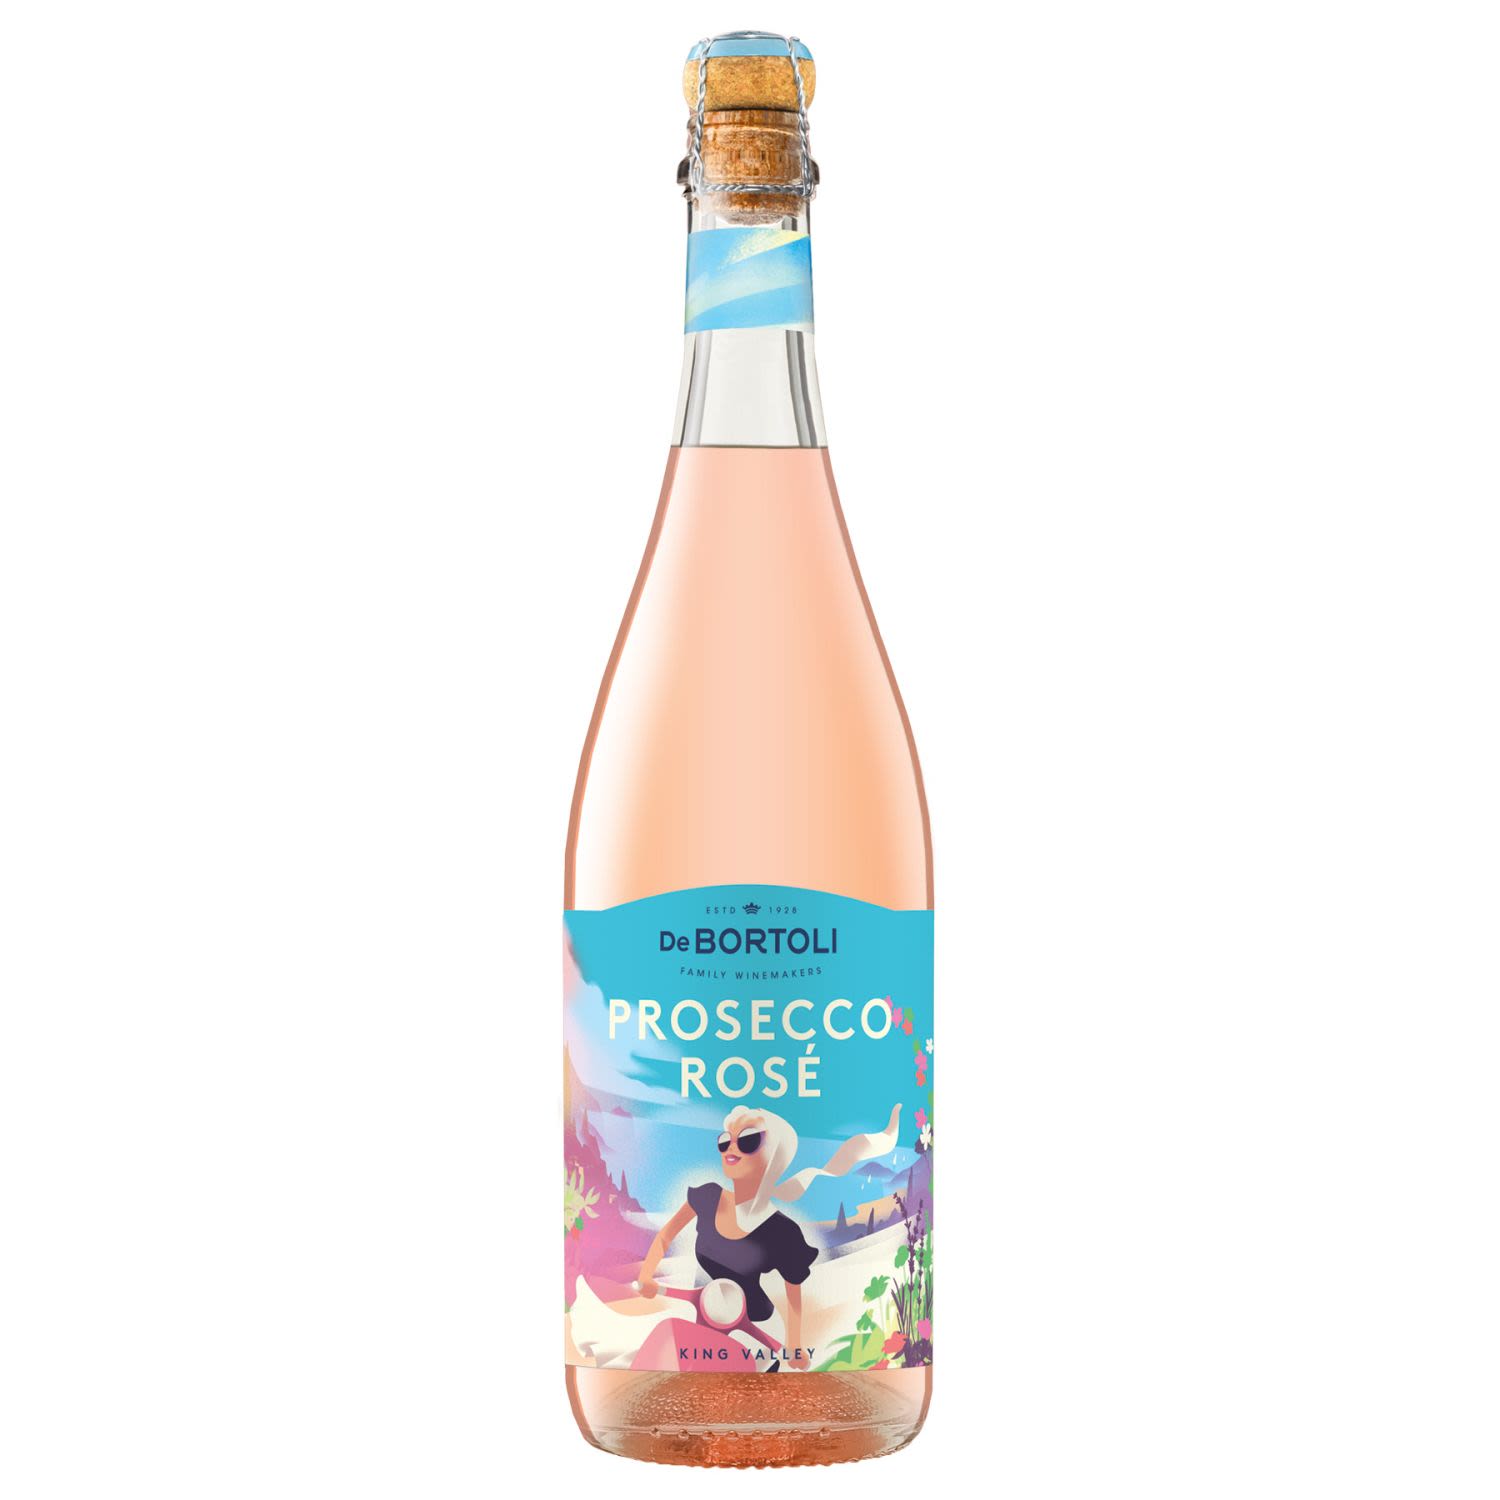 De Bortoli King Valley Prosecco Rose Bottle 750mL